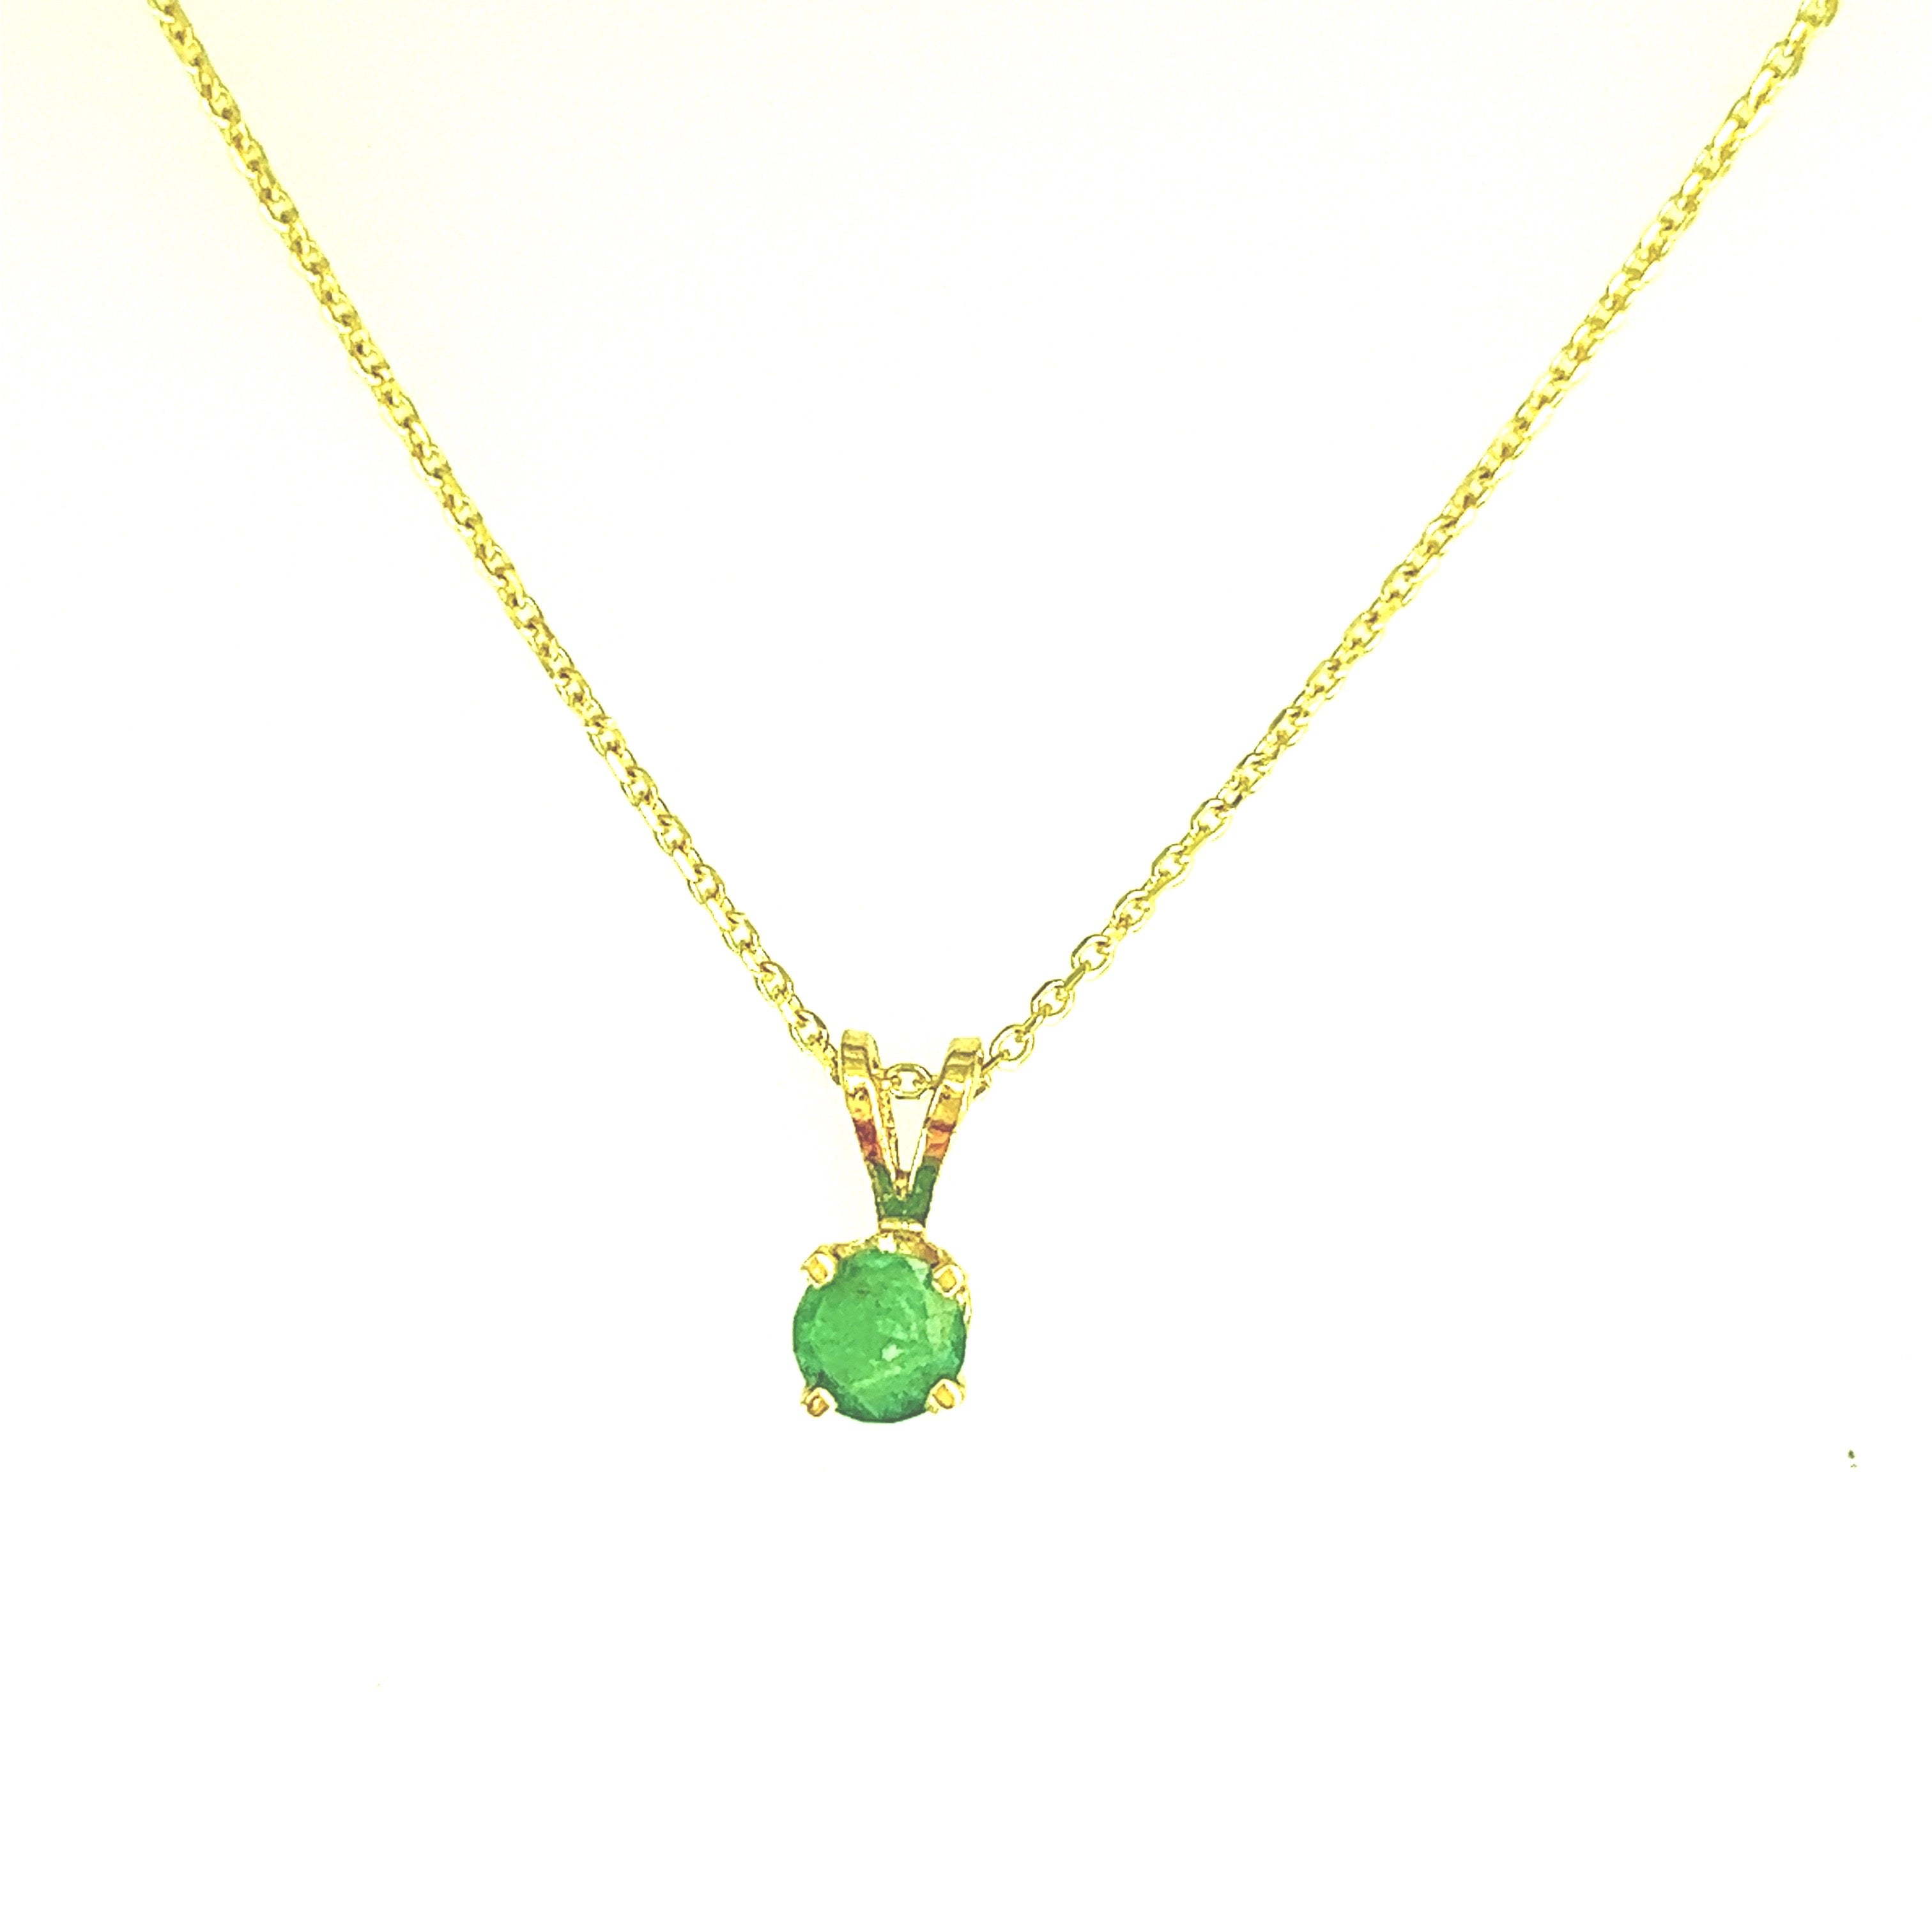 Emerald pendant in 14k yellow gold